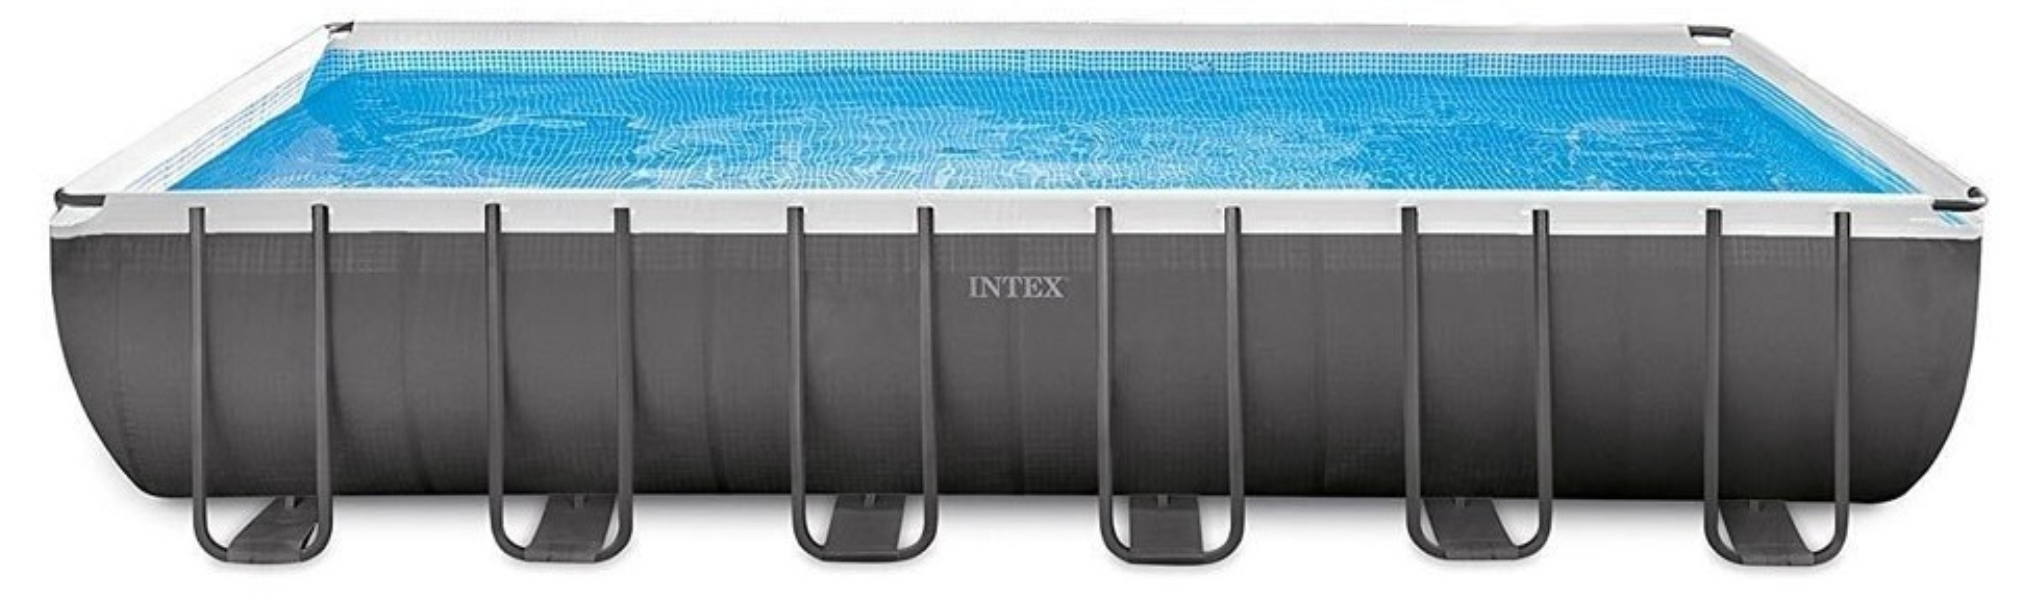 INTEX Լողավազան 7.32mX3.66mX1.32m